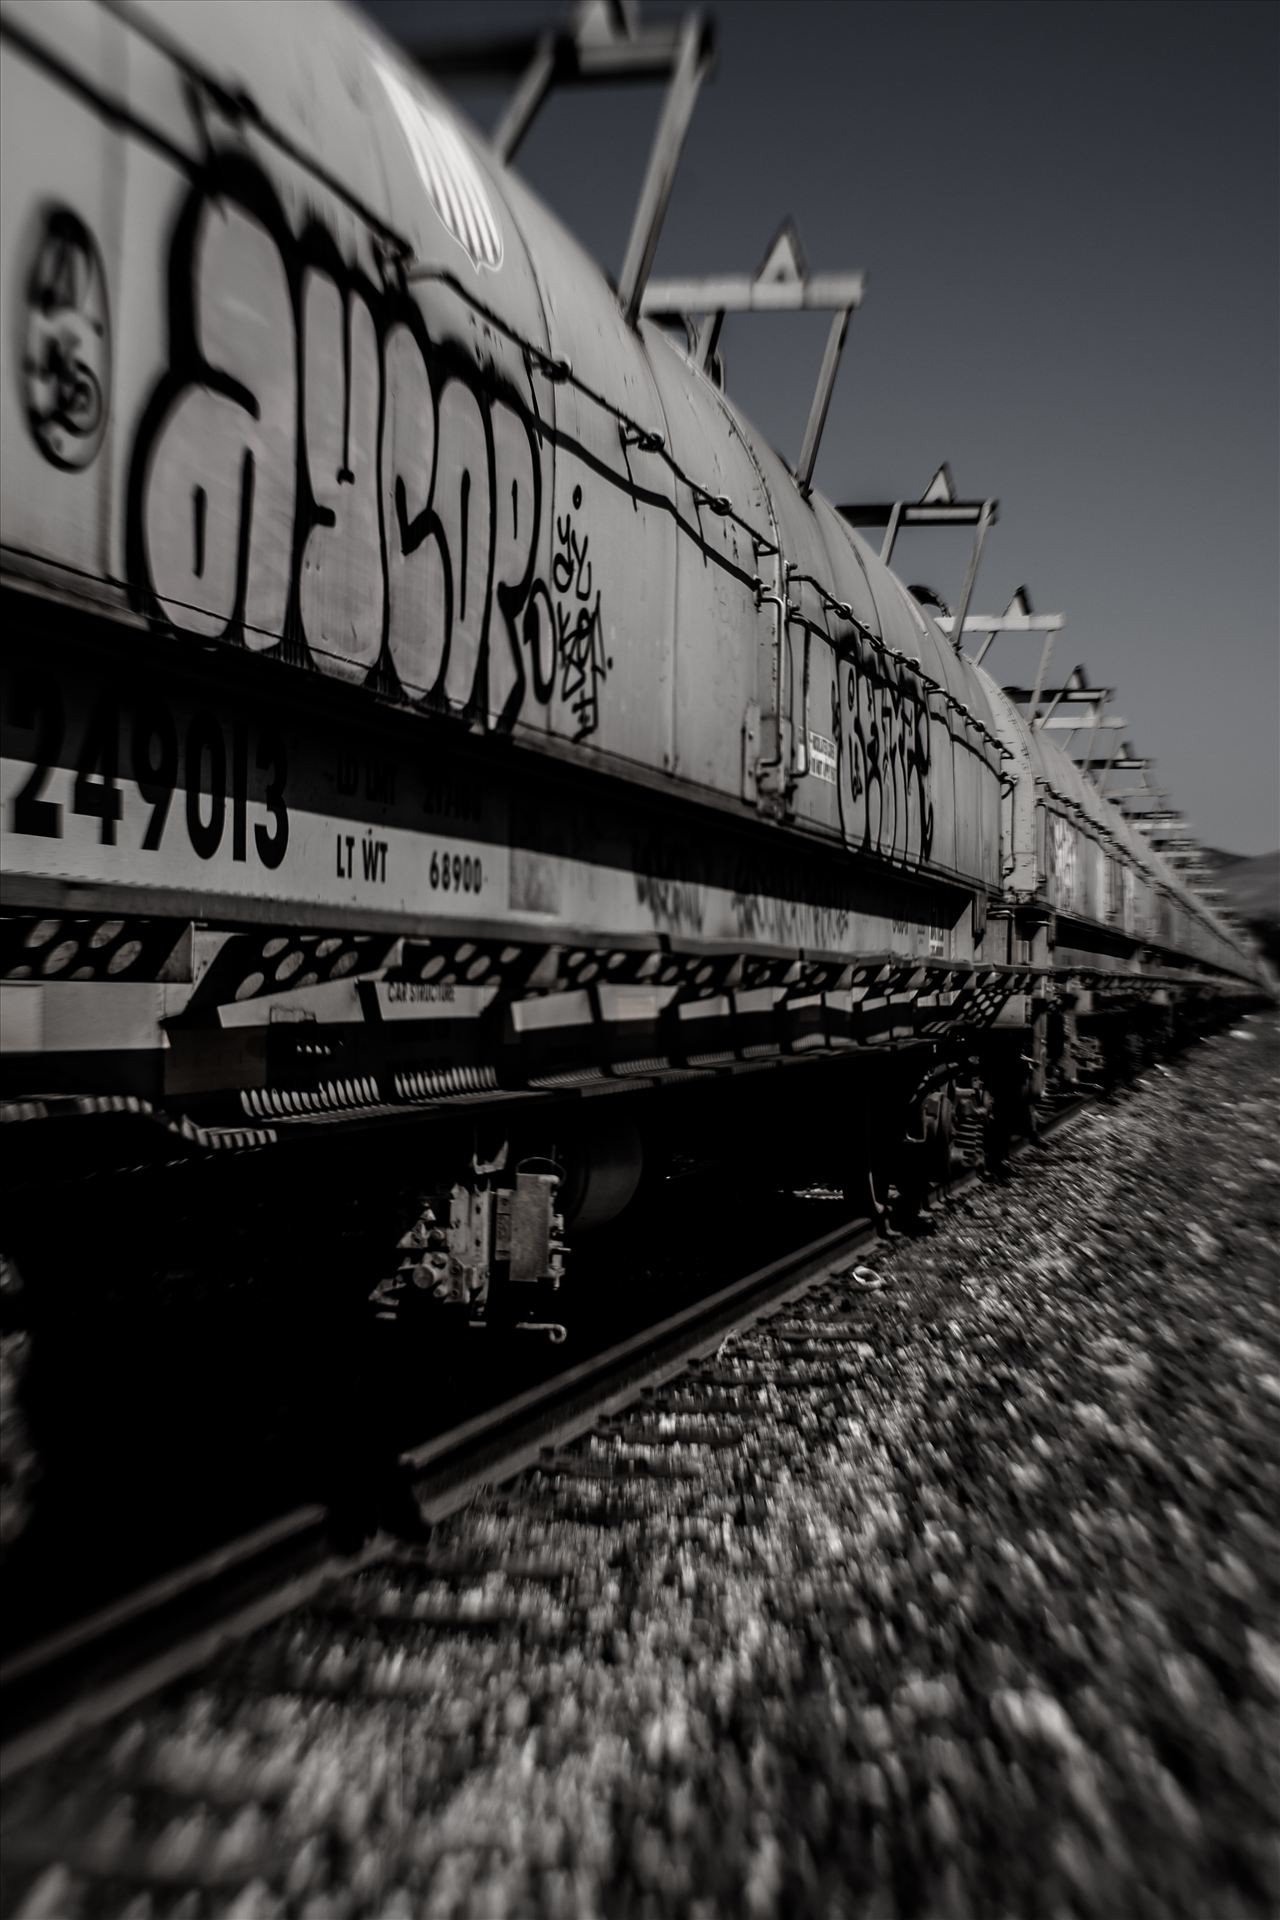 Graffiti Tankers Desaturated.jpg - Graffiti on oil tankers and infinity train tracks by Sarah Williams